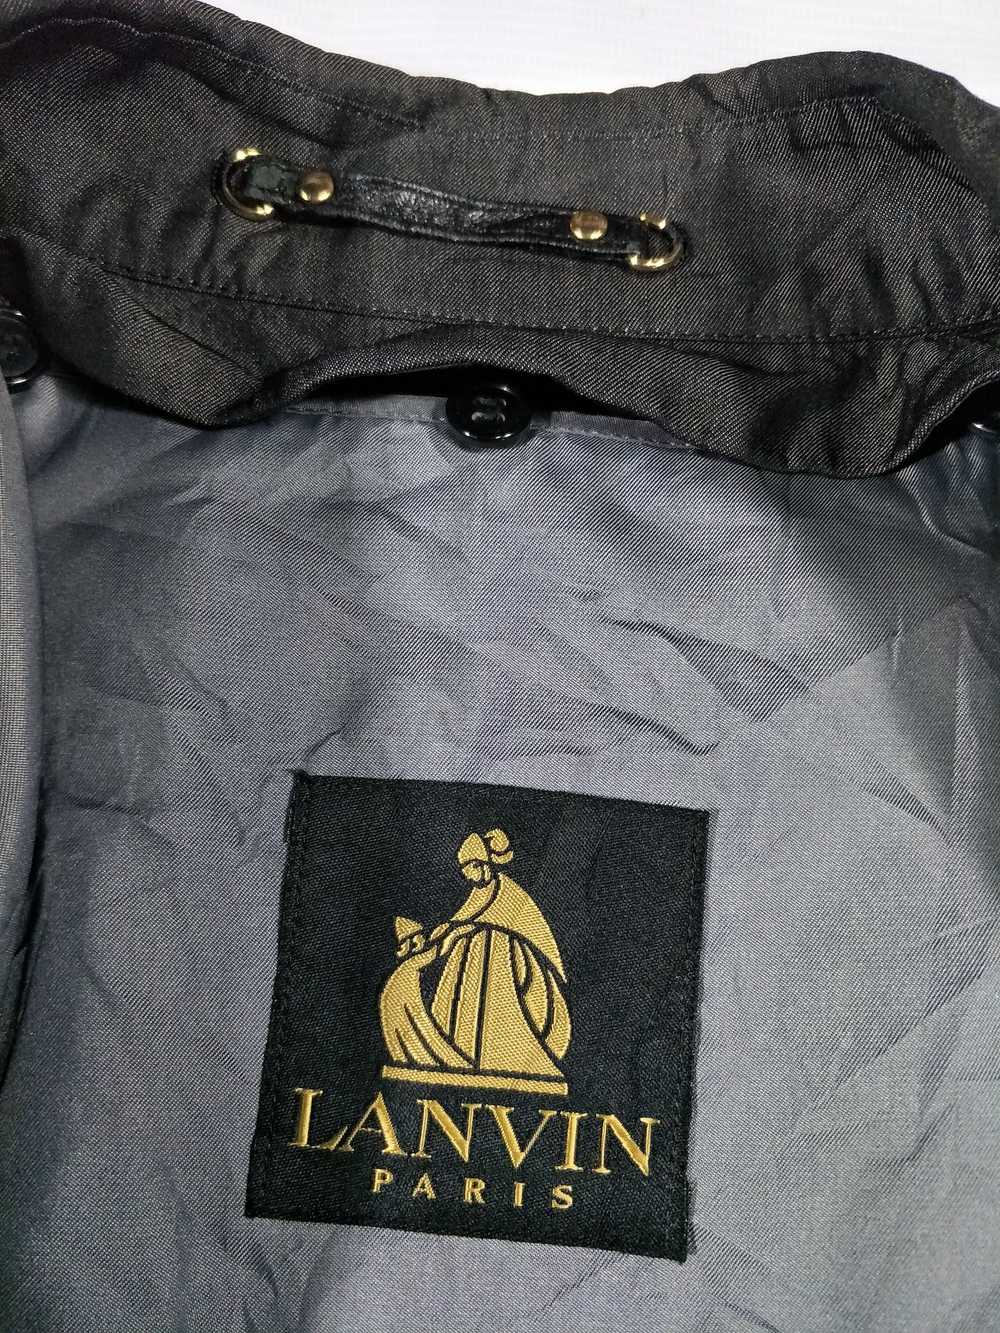 Lanvin Lanvin Full Length Coat Dark Gray Vintage - image 9